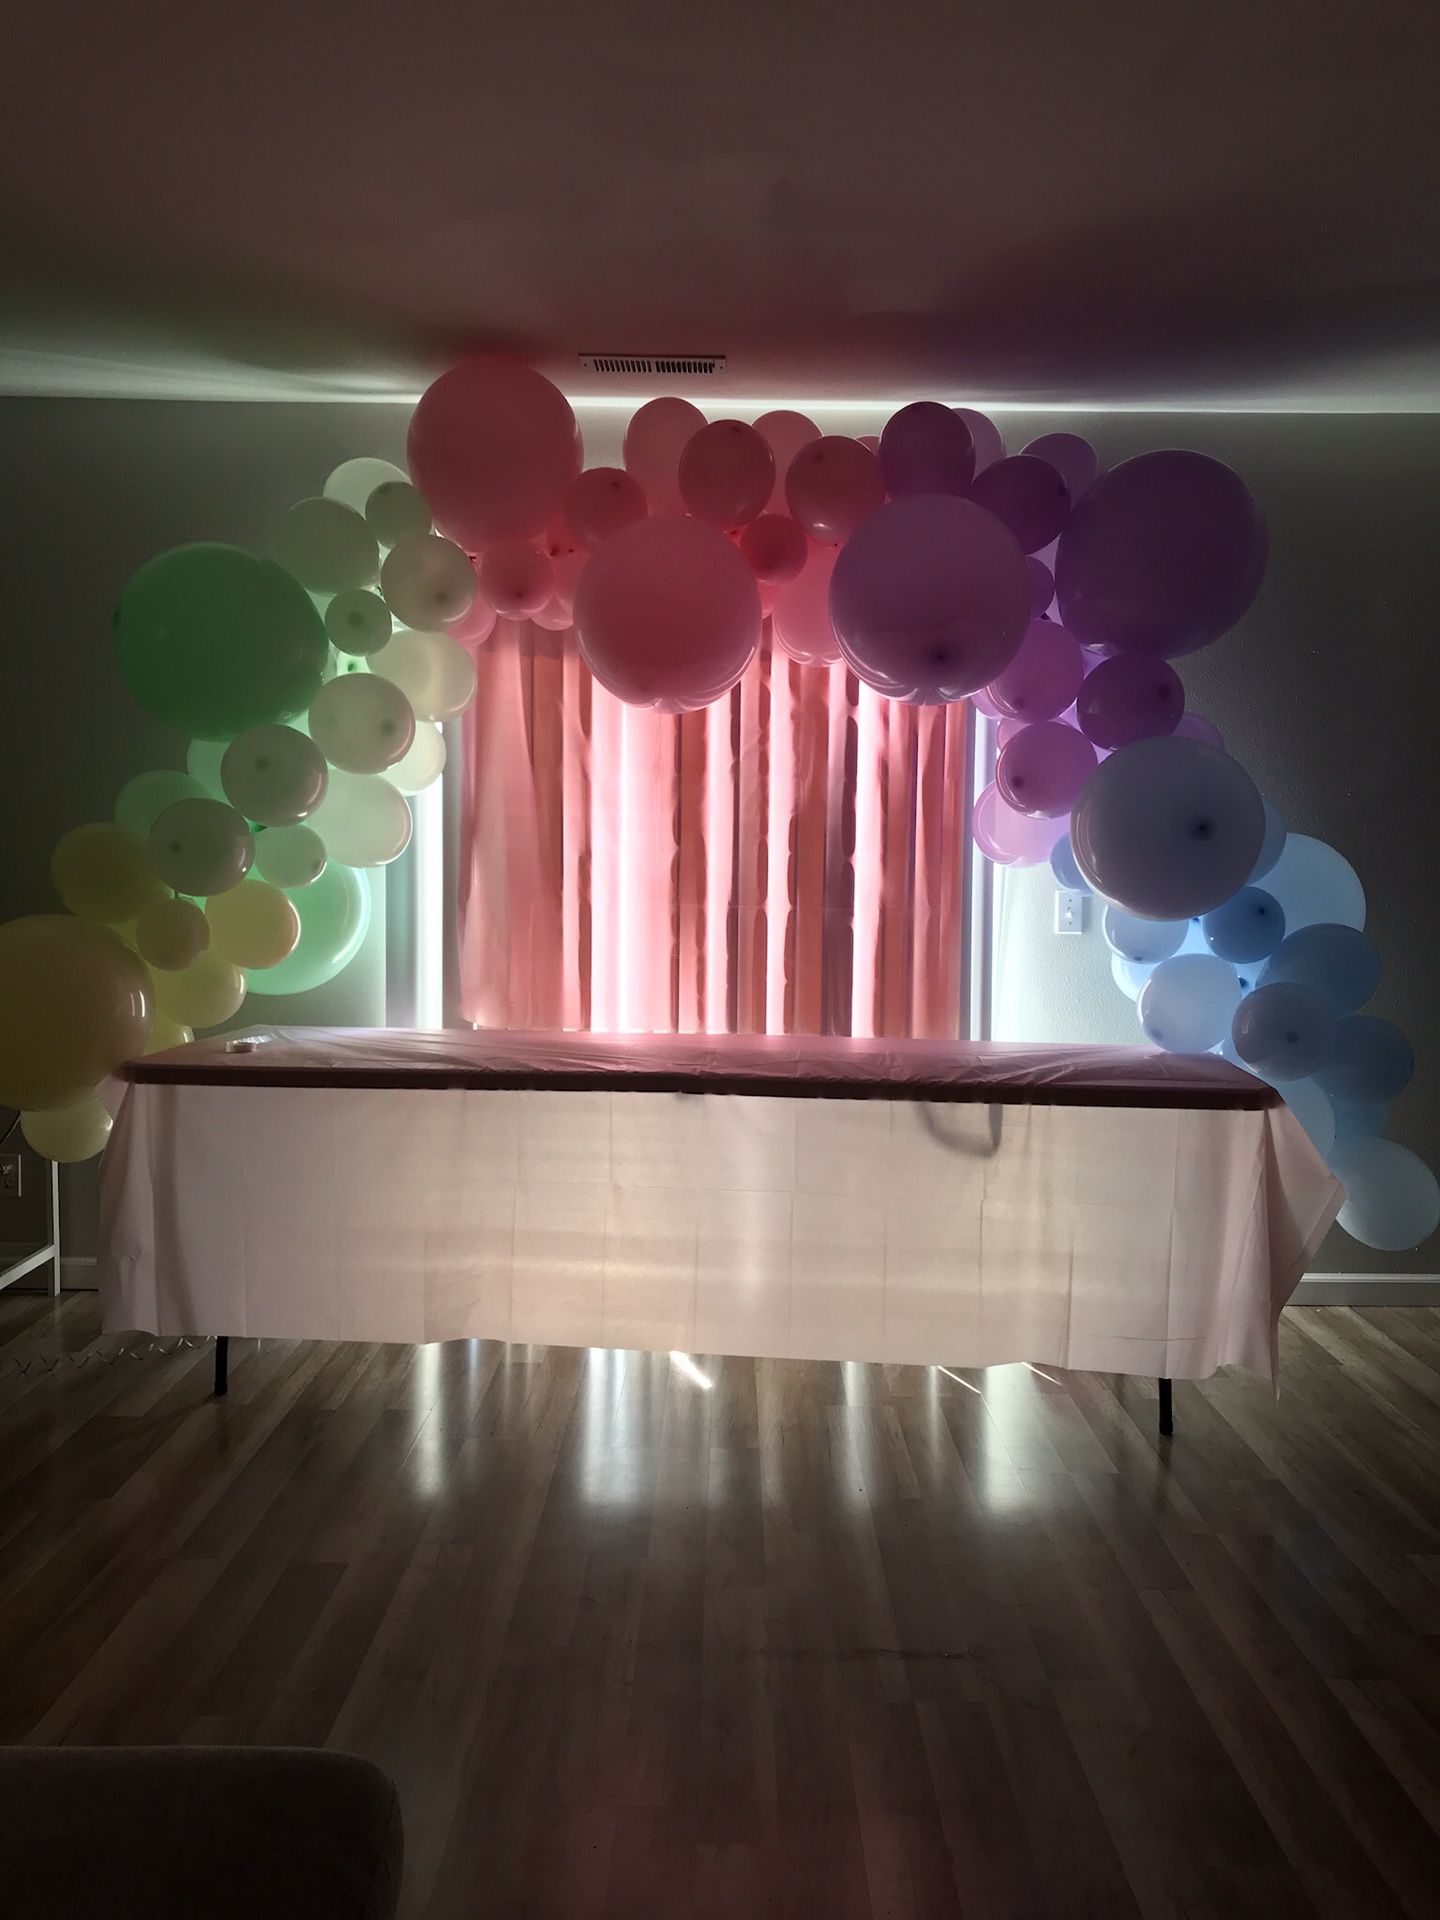 Free balloons